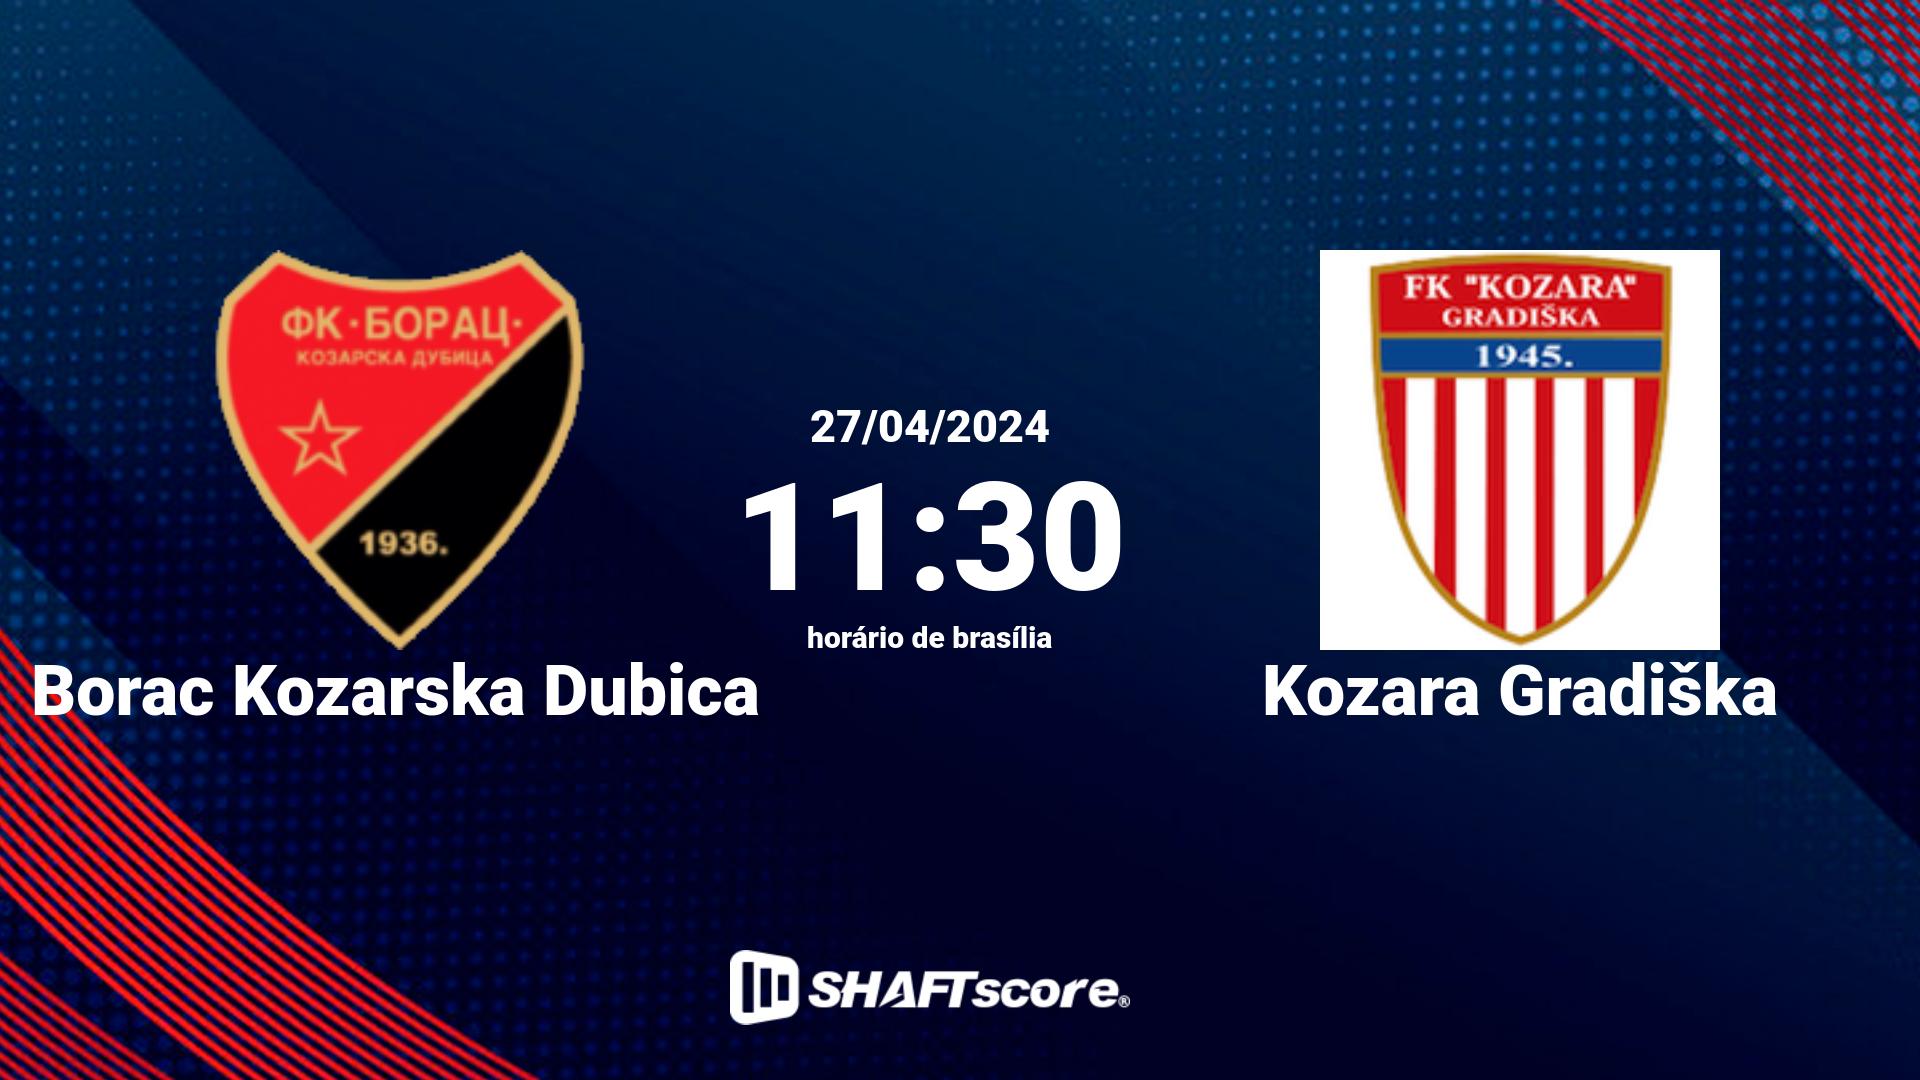 Estatísticas do jogo Borac Kozarska Dubica vs Kozara Gradiška 27.04 11:30